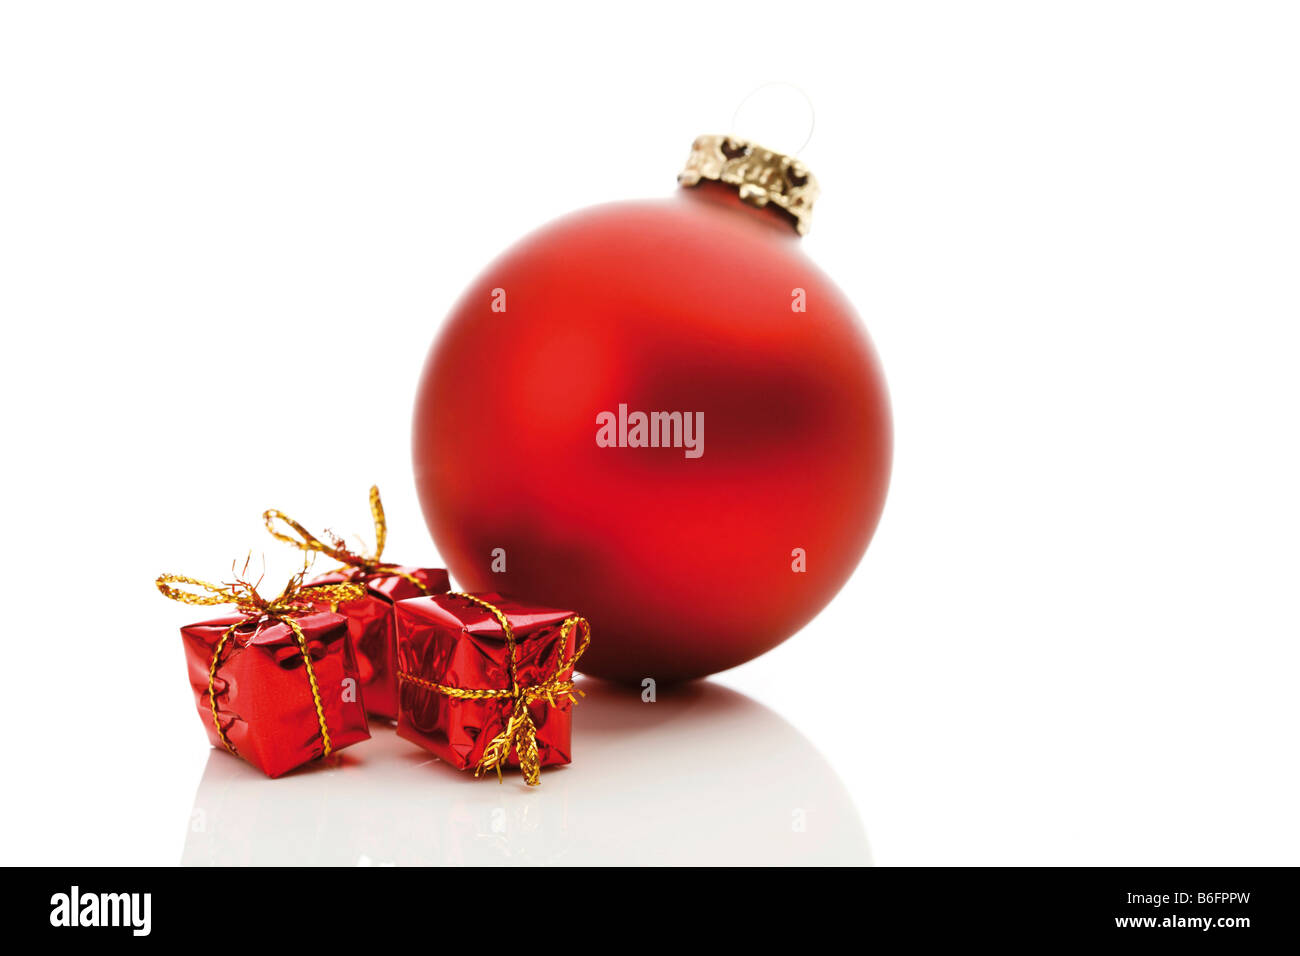 Christmas tree ball with presents Stock Photo